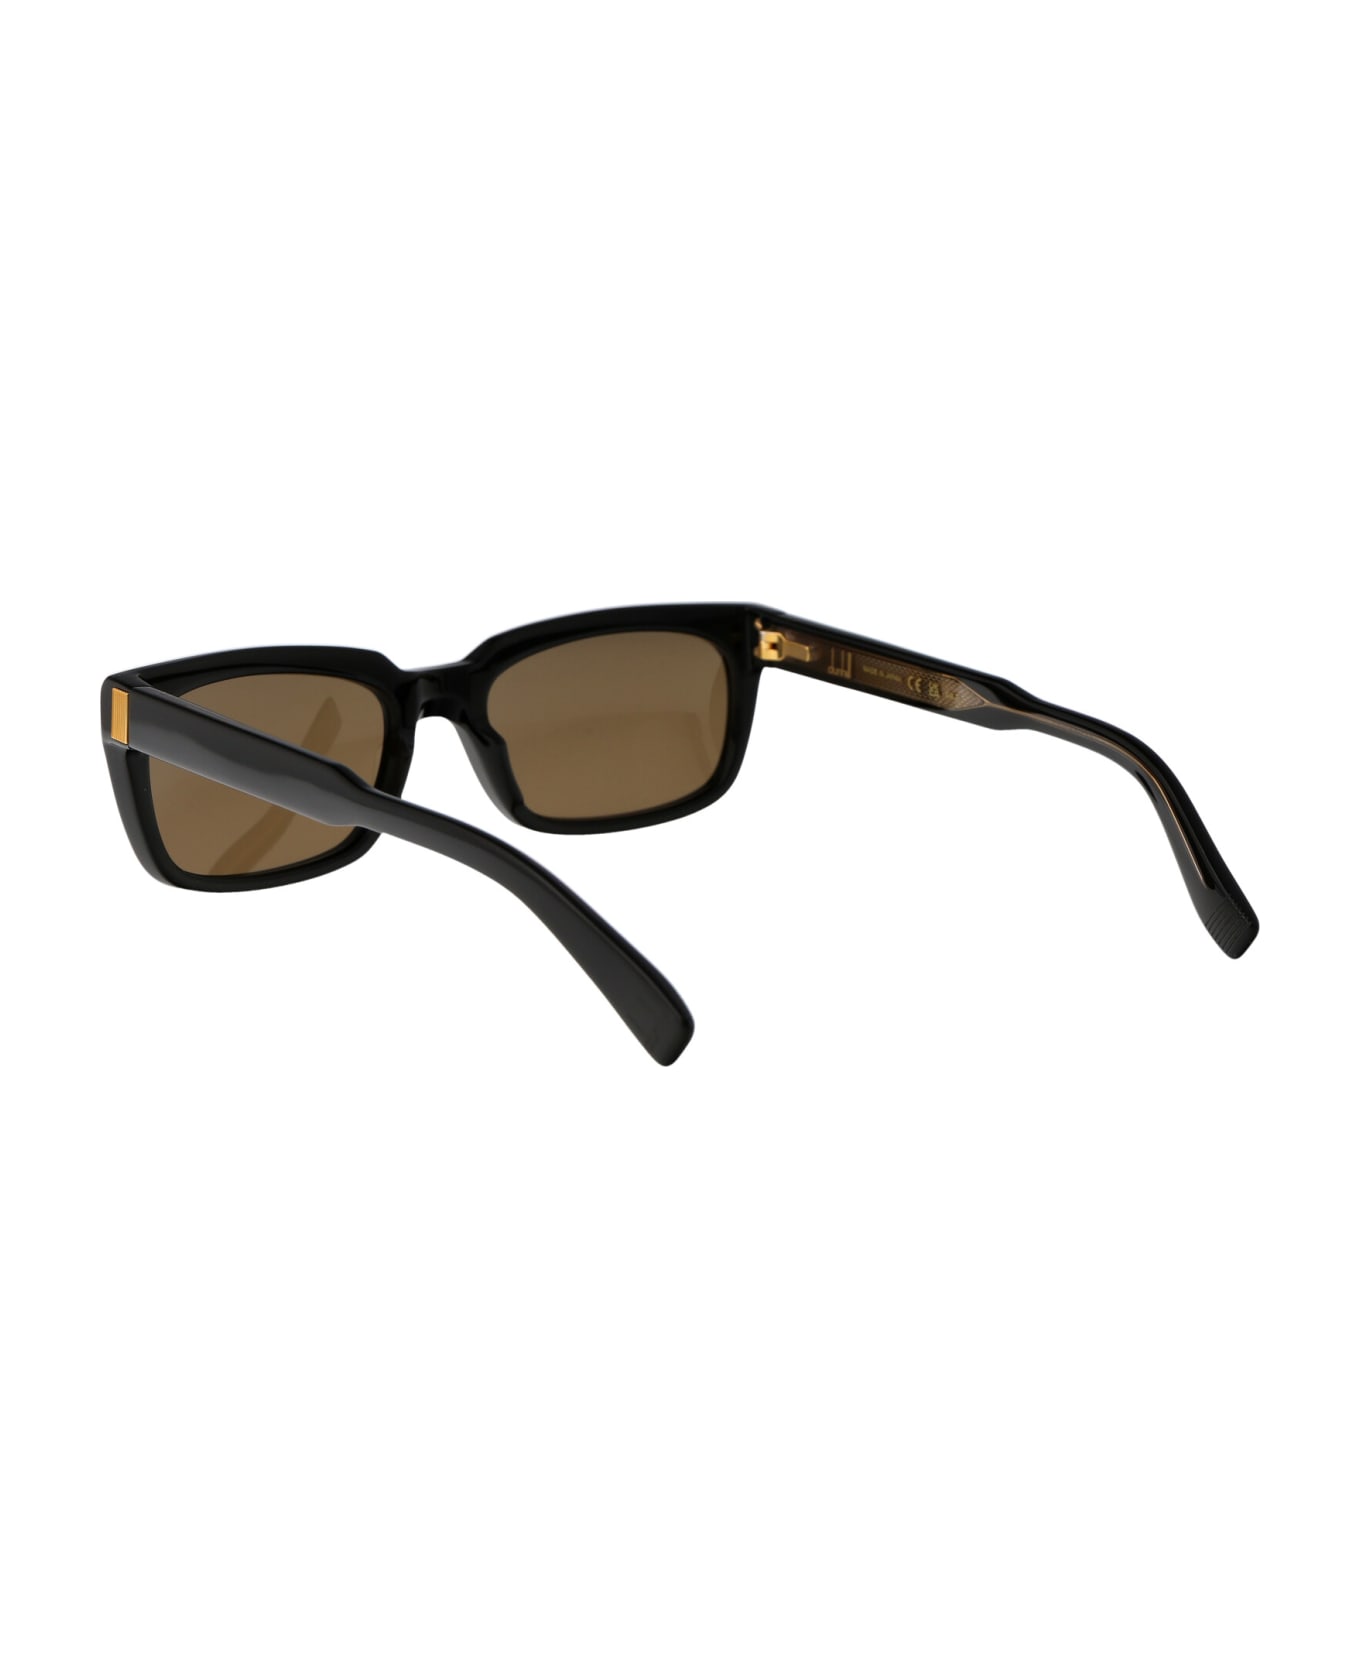 Dunhill Du0056s Sunglasses - 001 BLACK BLACK BROWN サングラス